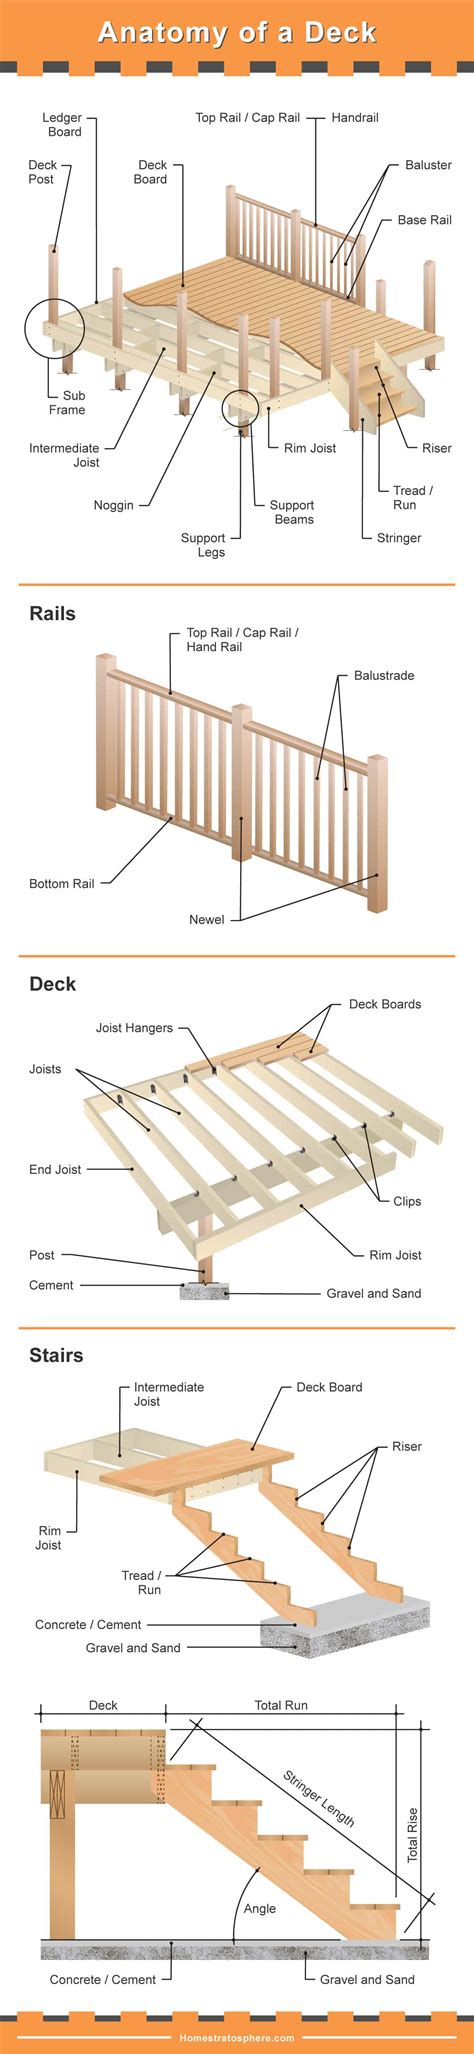 deck ideas designs